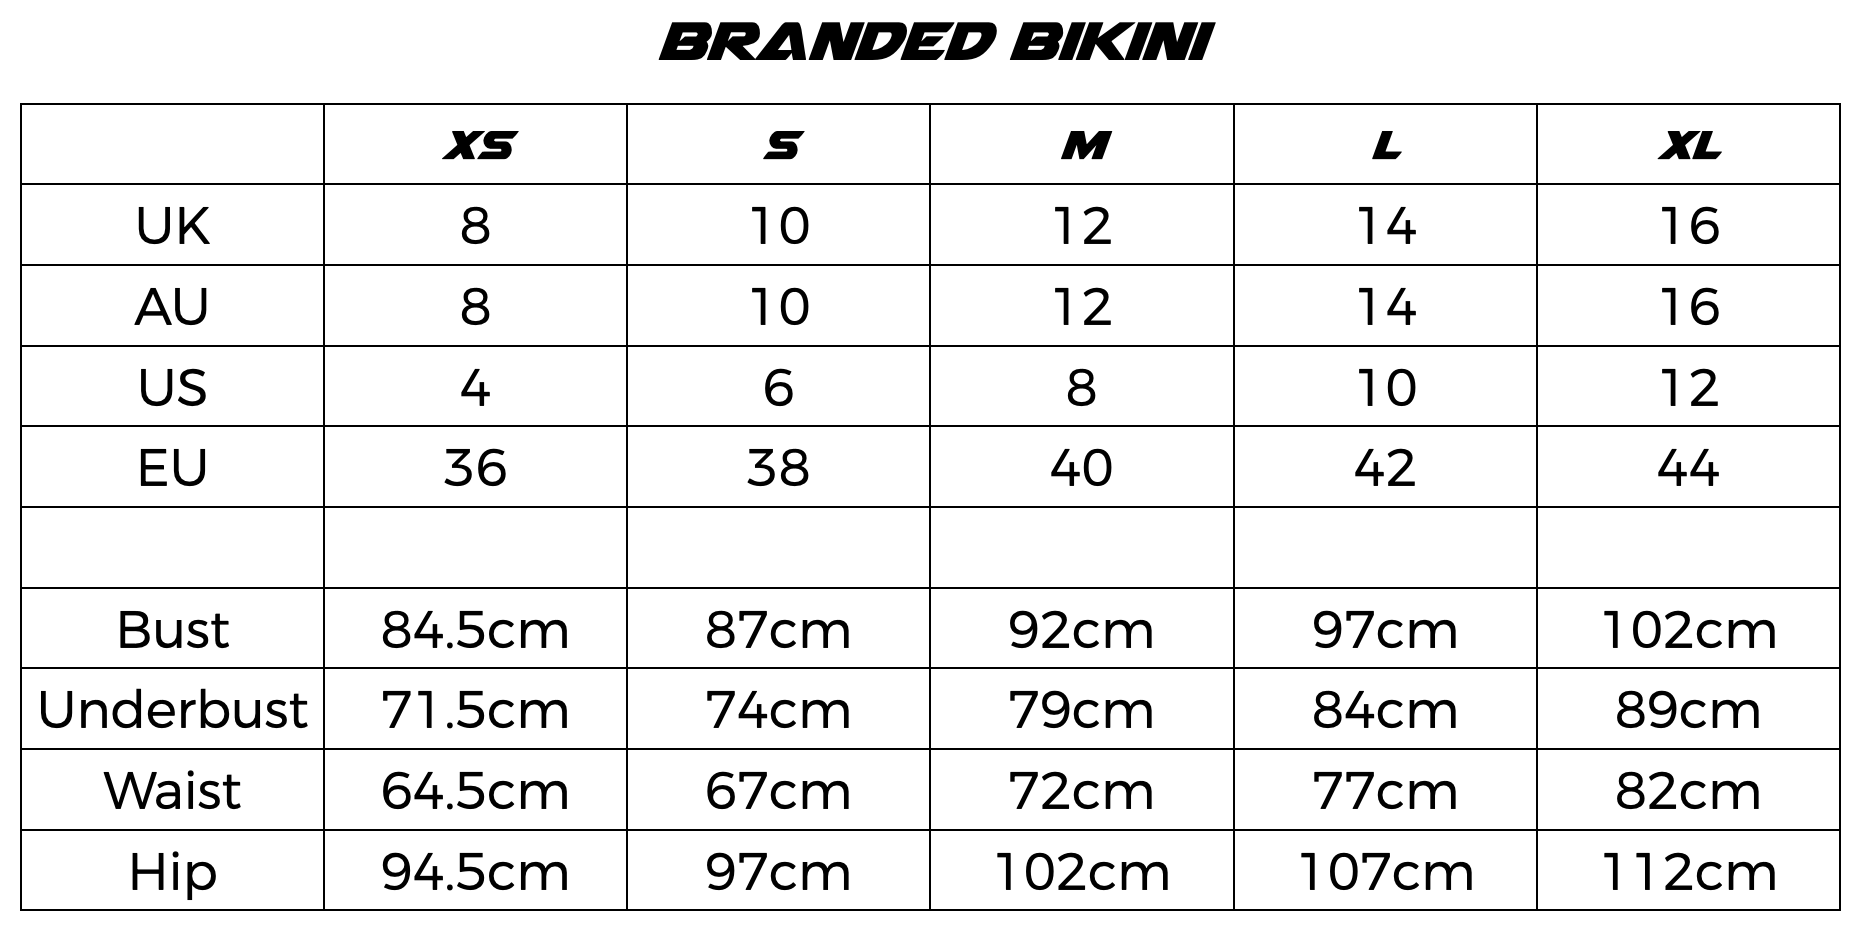 Brande Bikini Size Chart